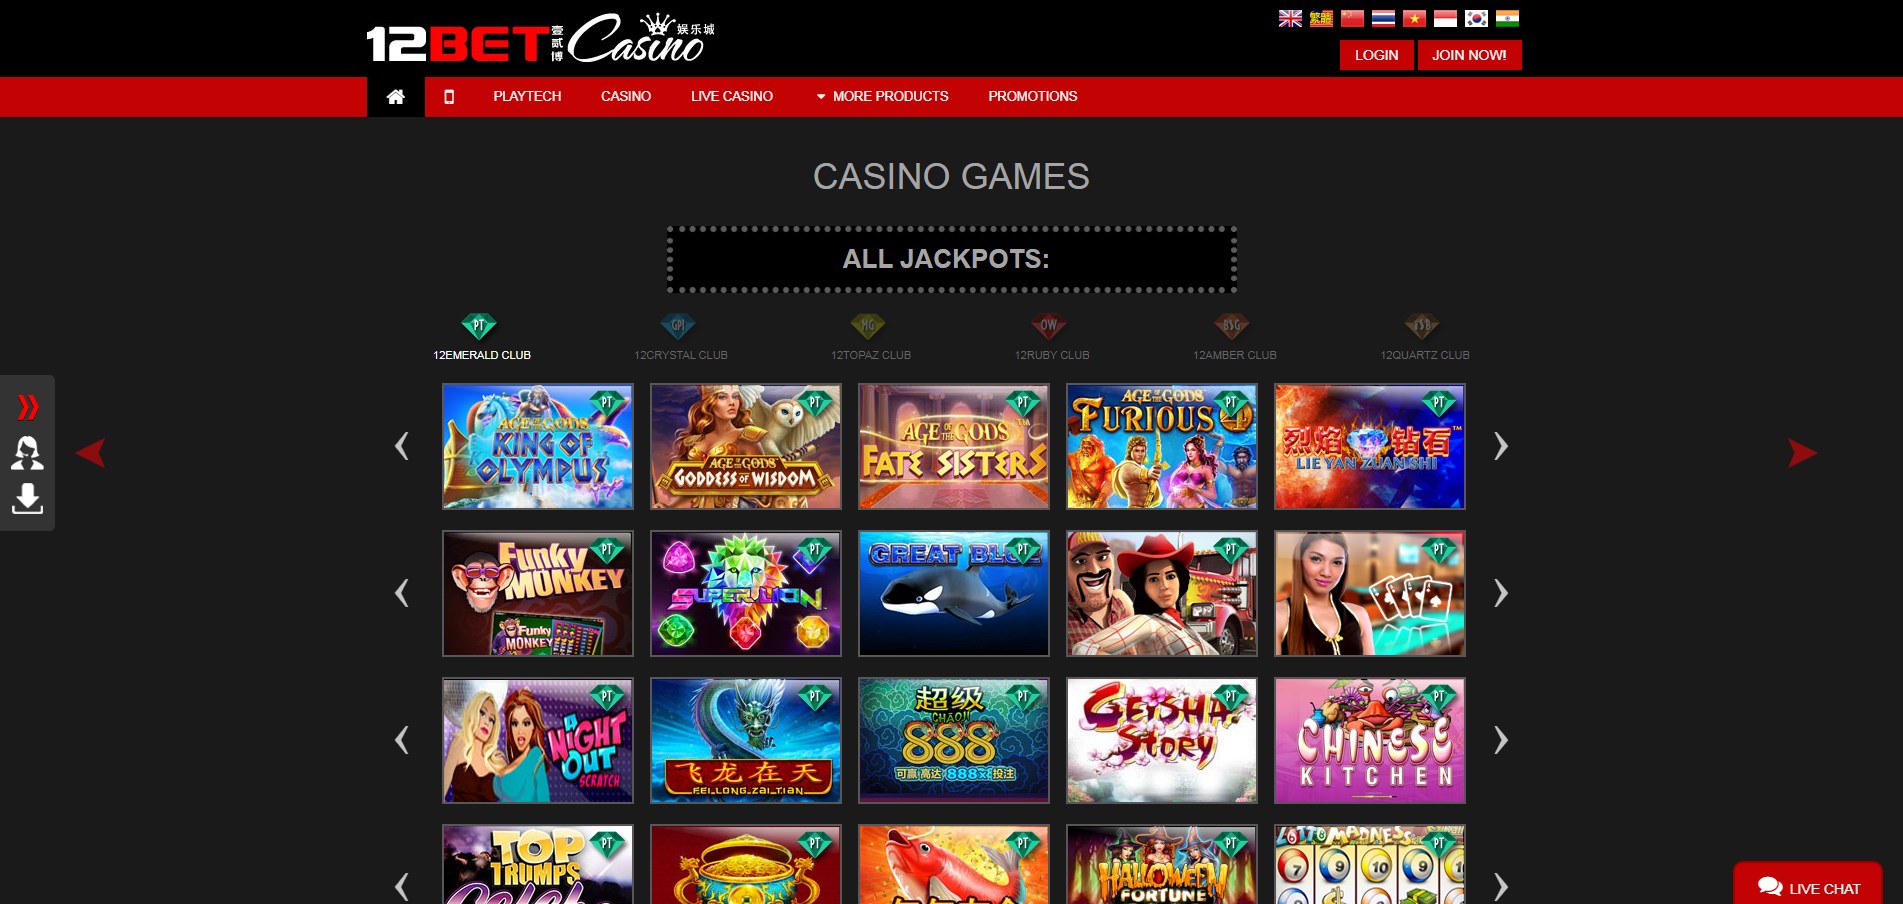 12 Bet Casino Review